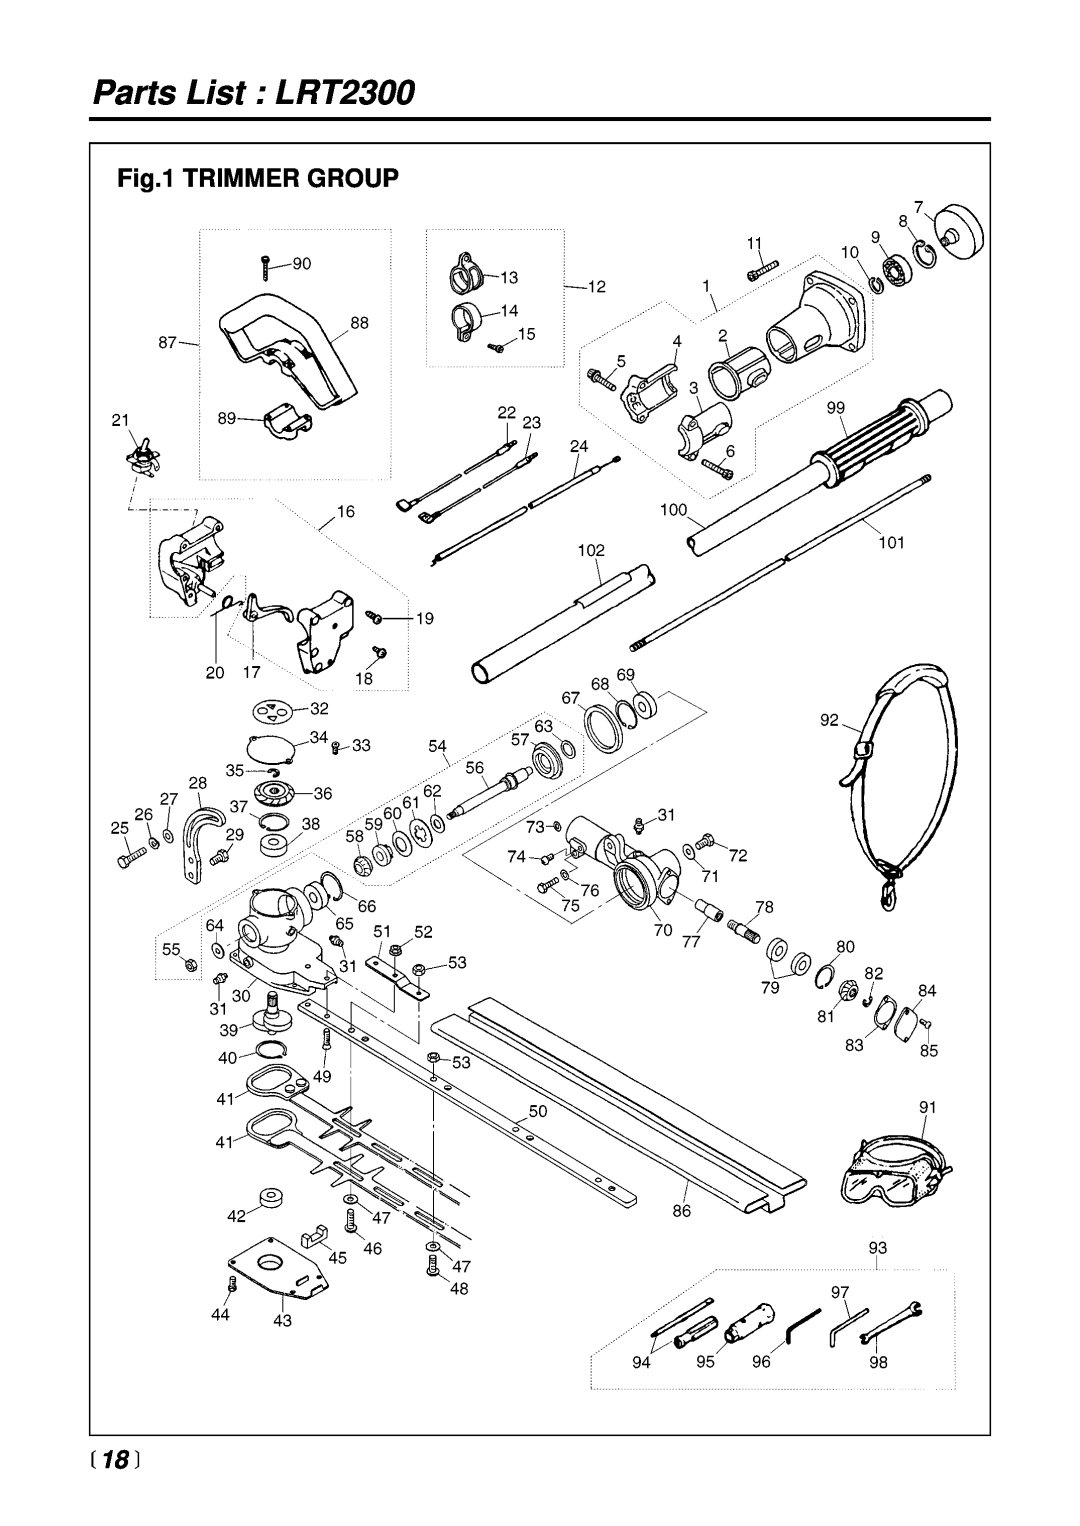 RedMax manual Parts List LRT2300, Trimmer Group,  18  